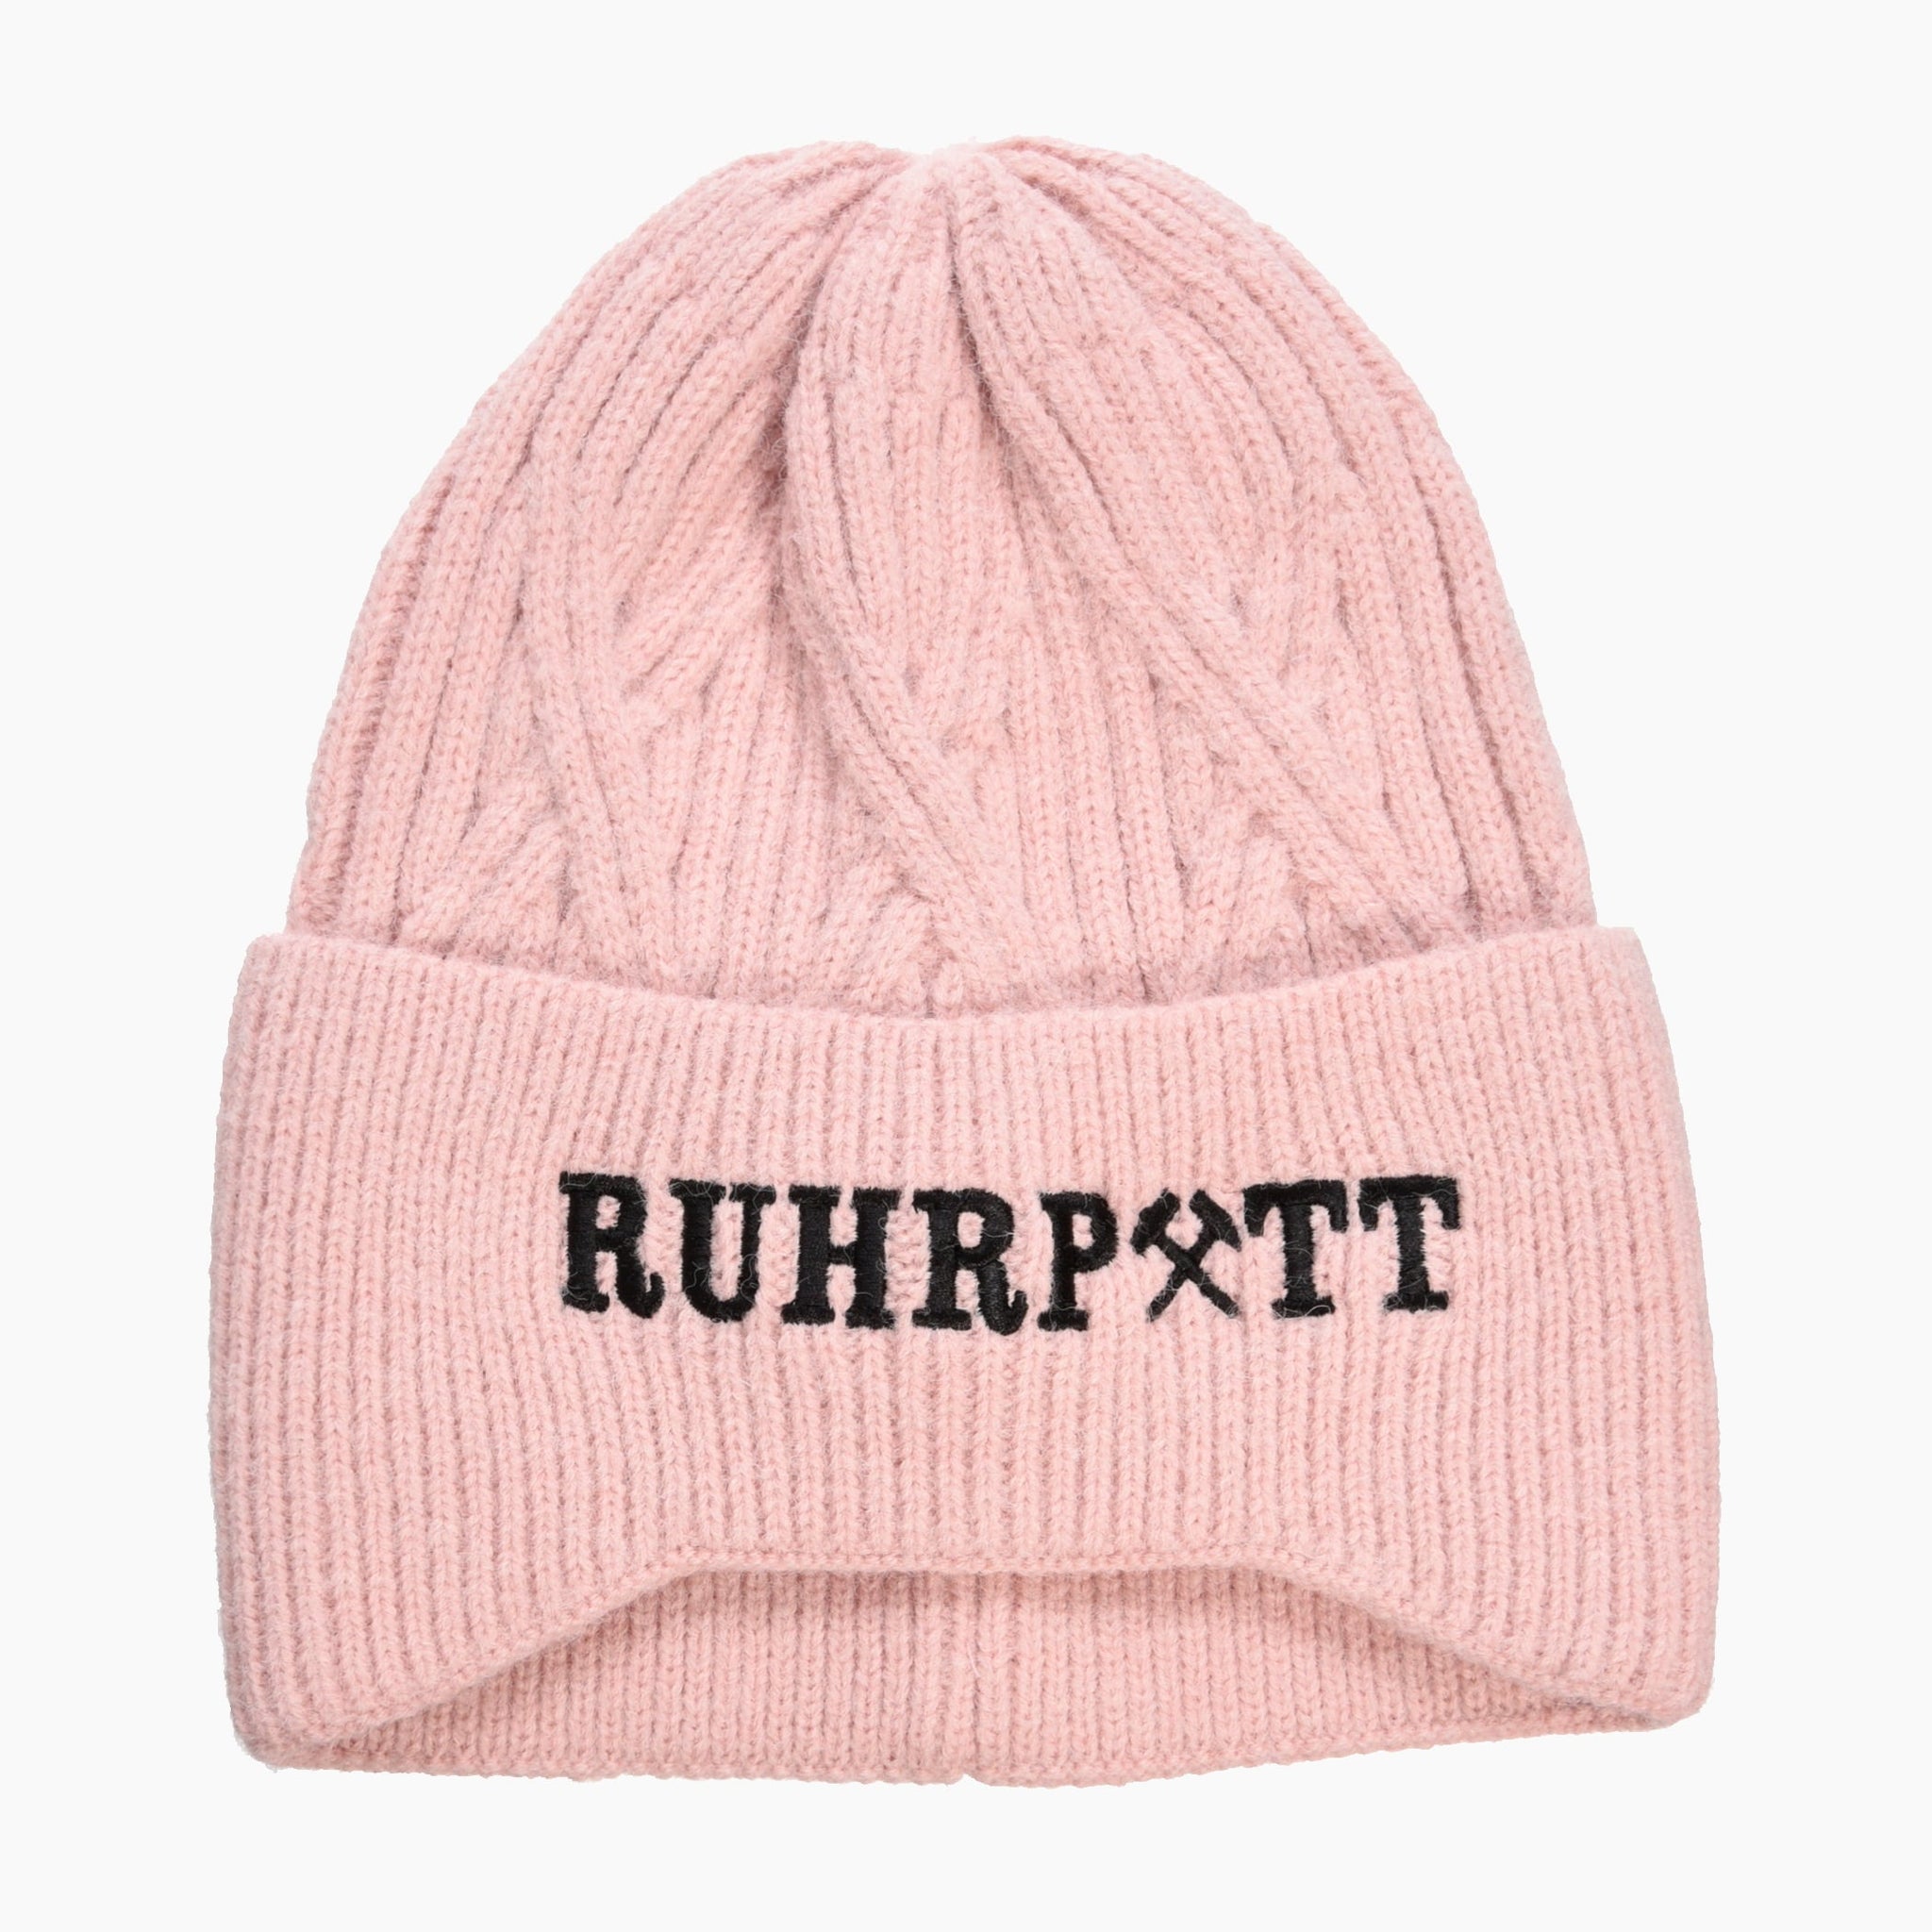 Ruhrpott Winterhat - Robin Ruth